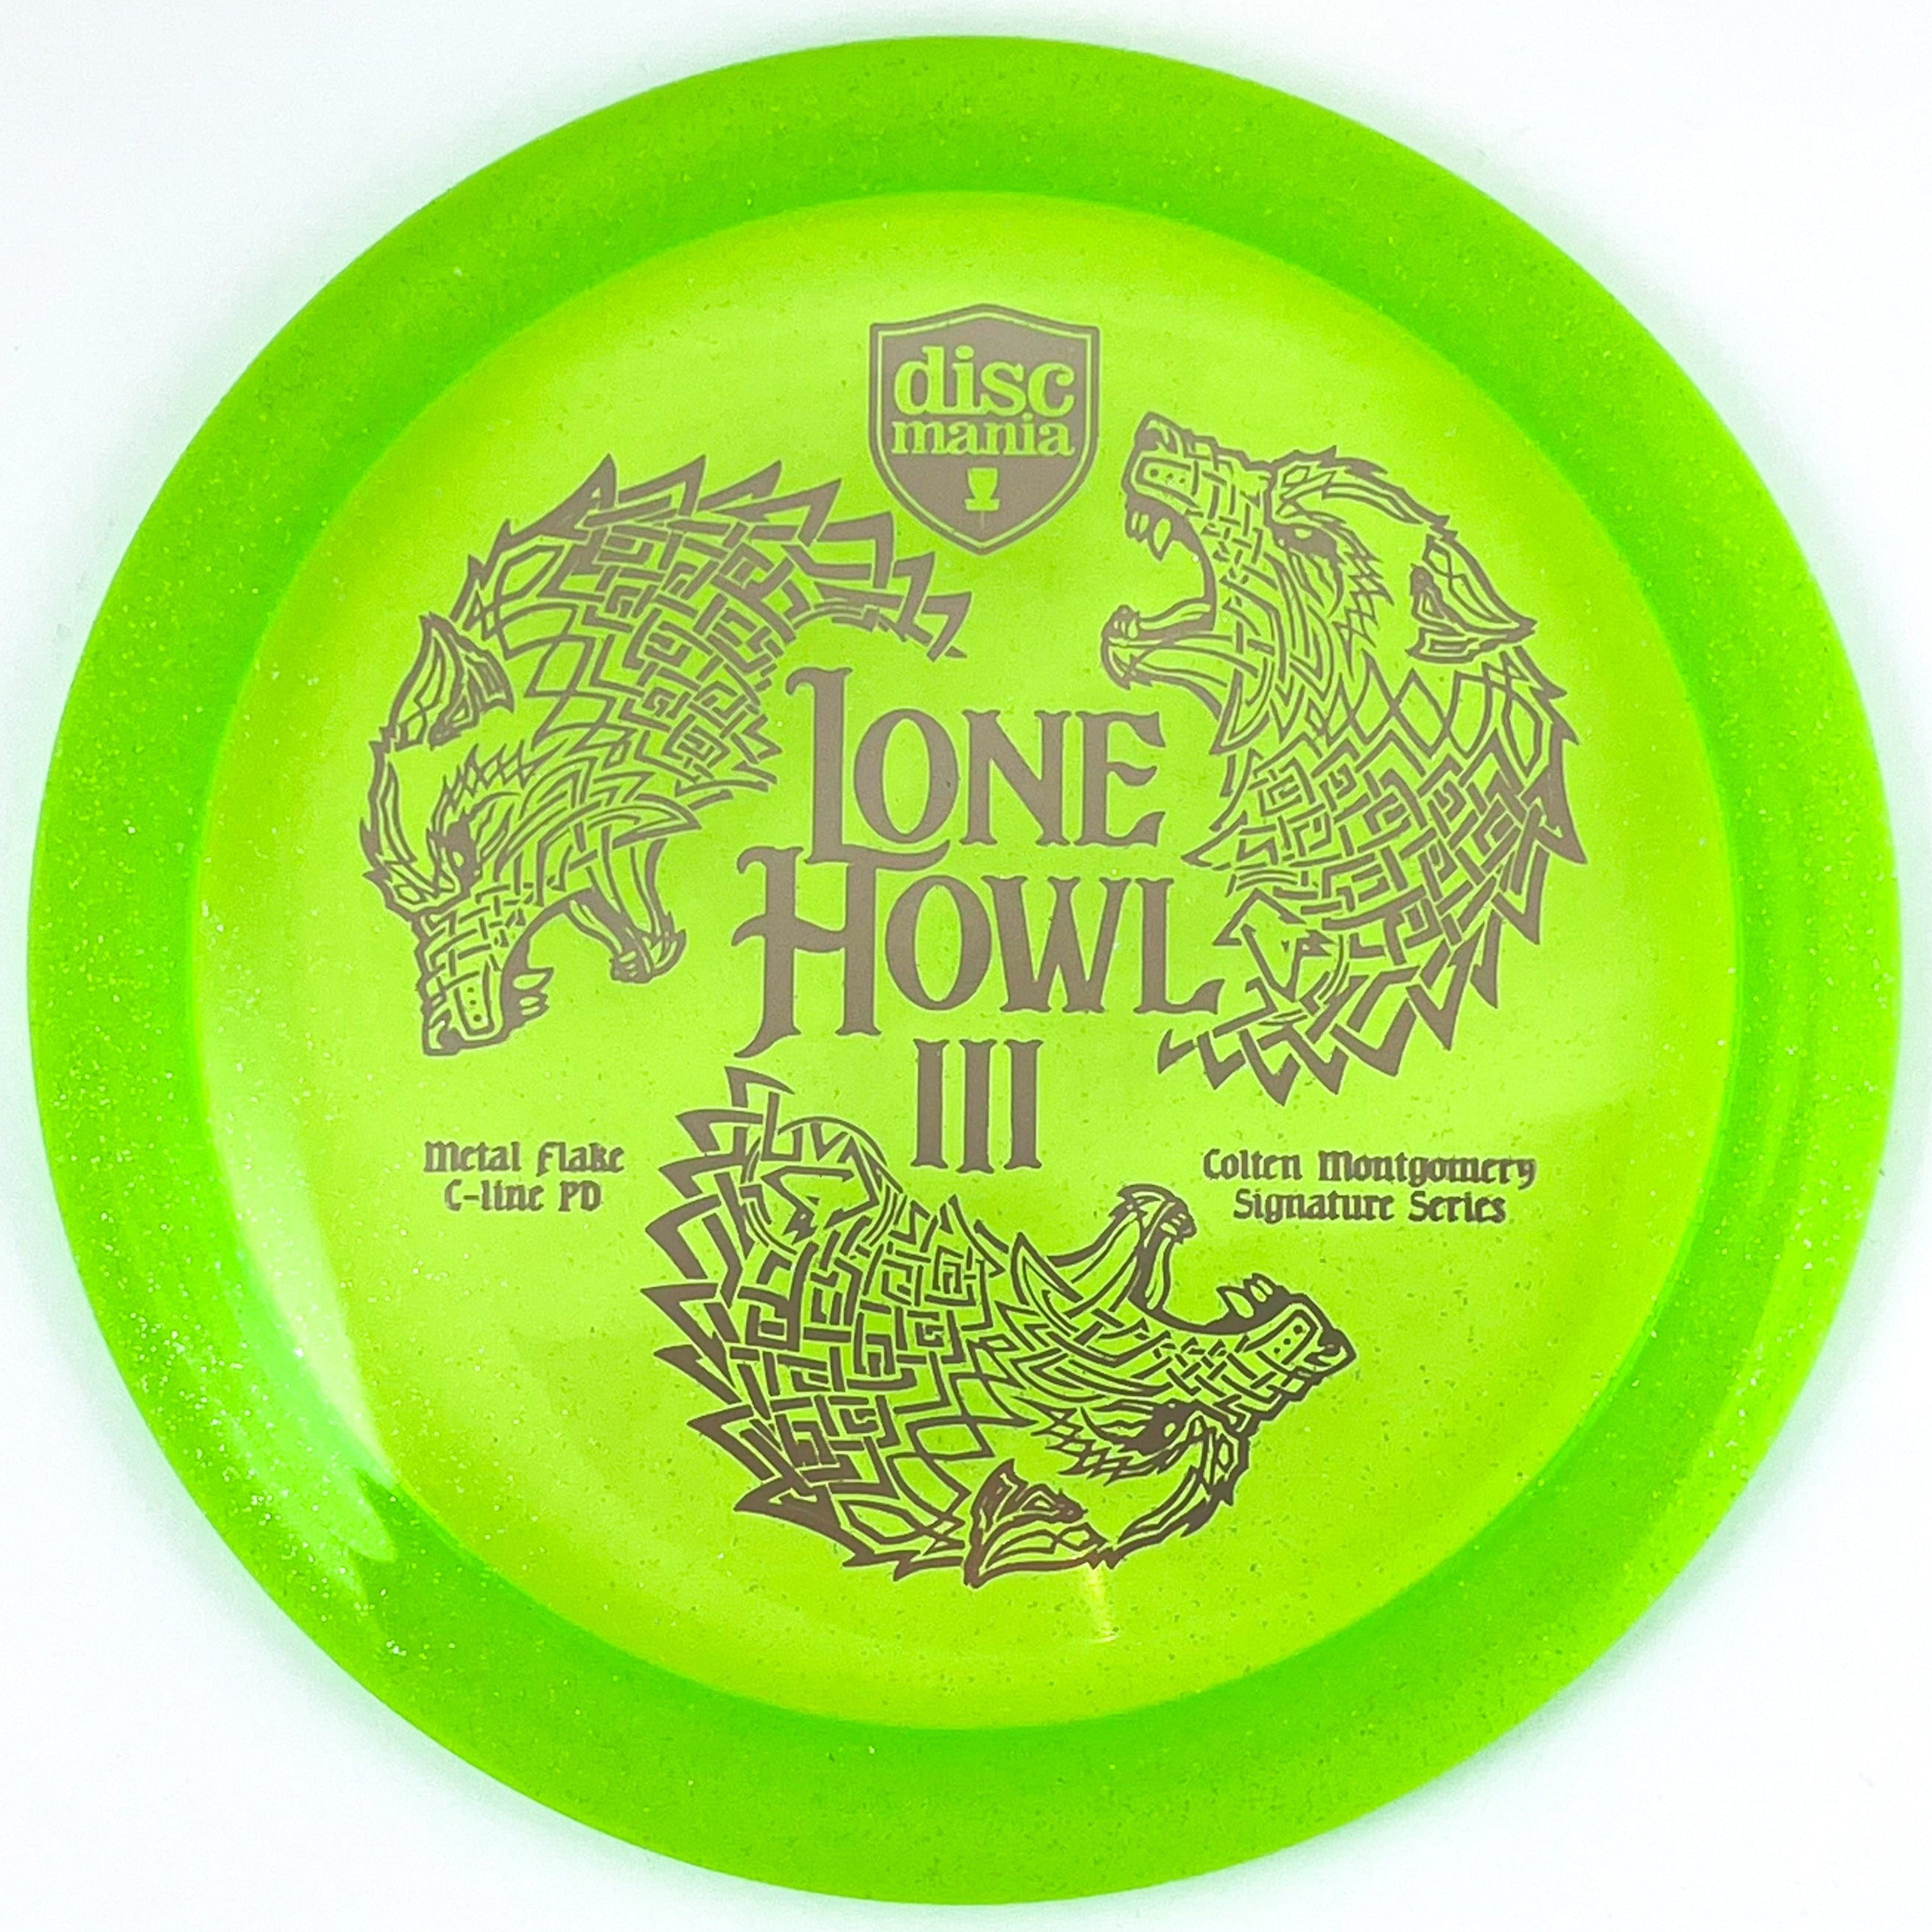 Colton Mongomery Signature Series Lone Howl 3 | Metal Flake C-Line PD disc golf fairway driver by Discmania Golf Discs.